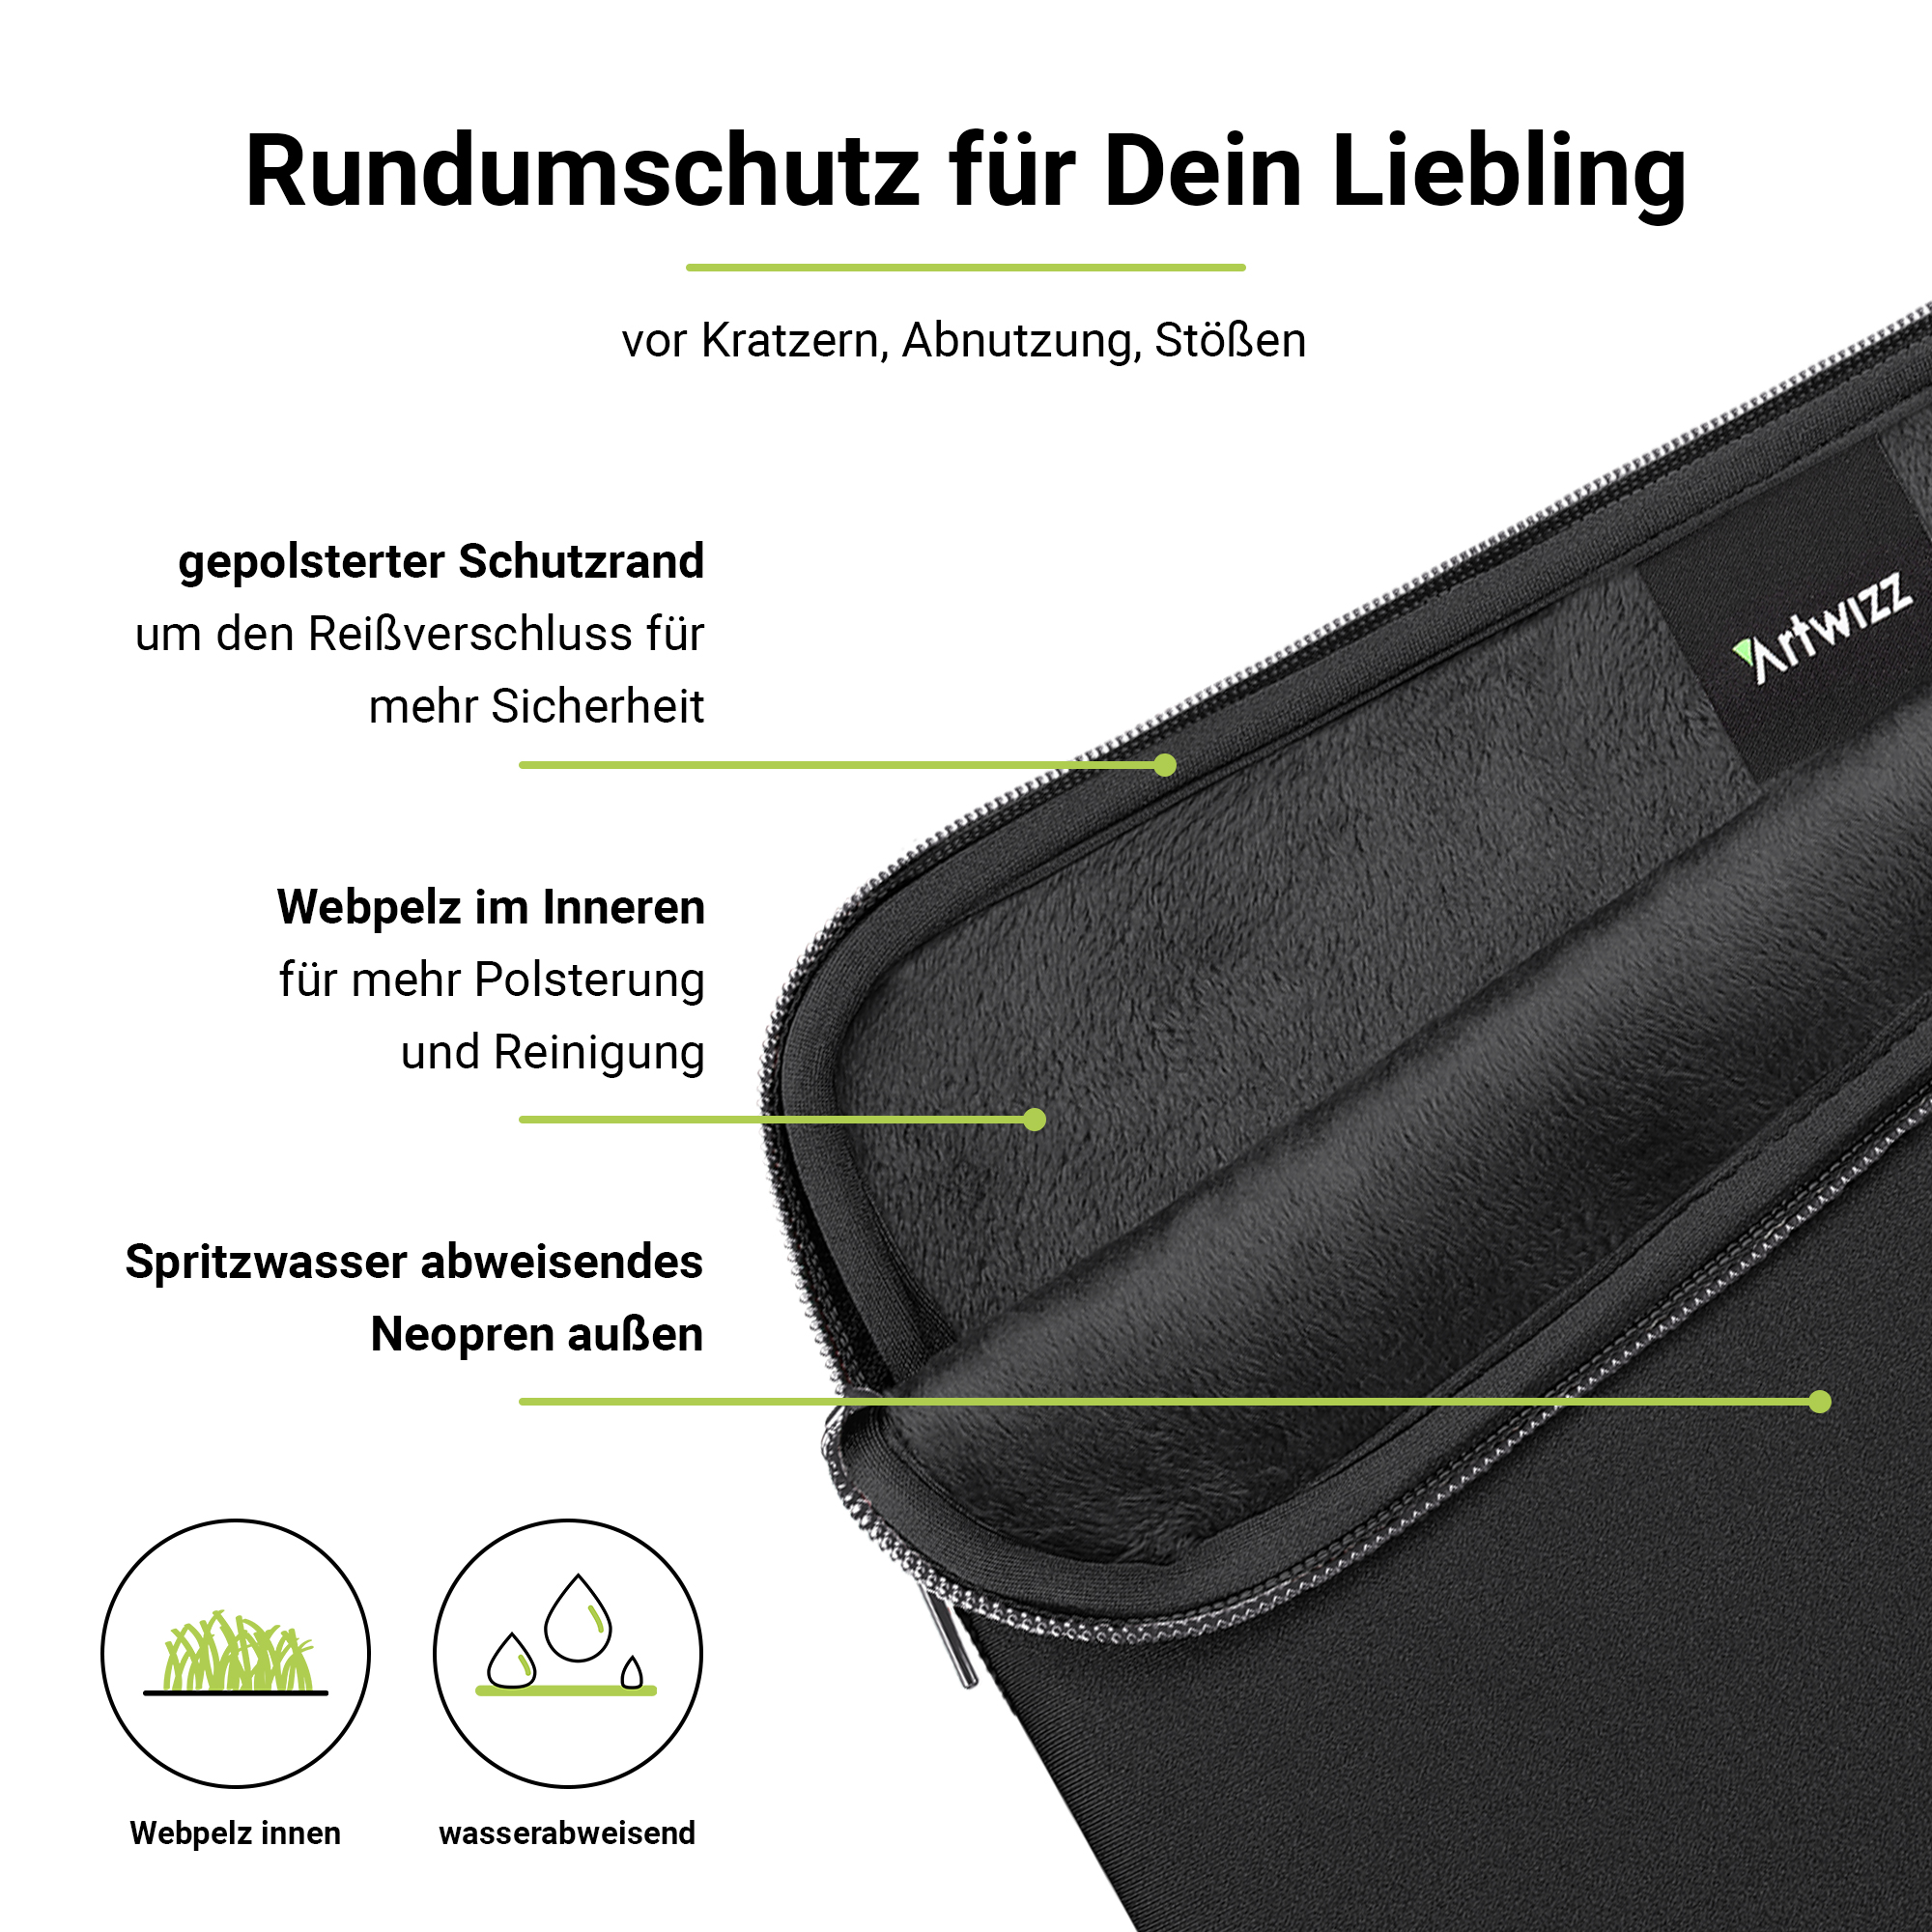 ARTWIZZ Neoprene Sleeve für Tasche Notebook Apple Schwarz Neopren, Sleeve